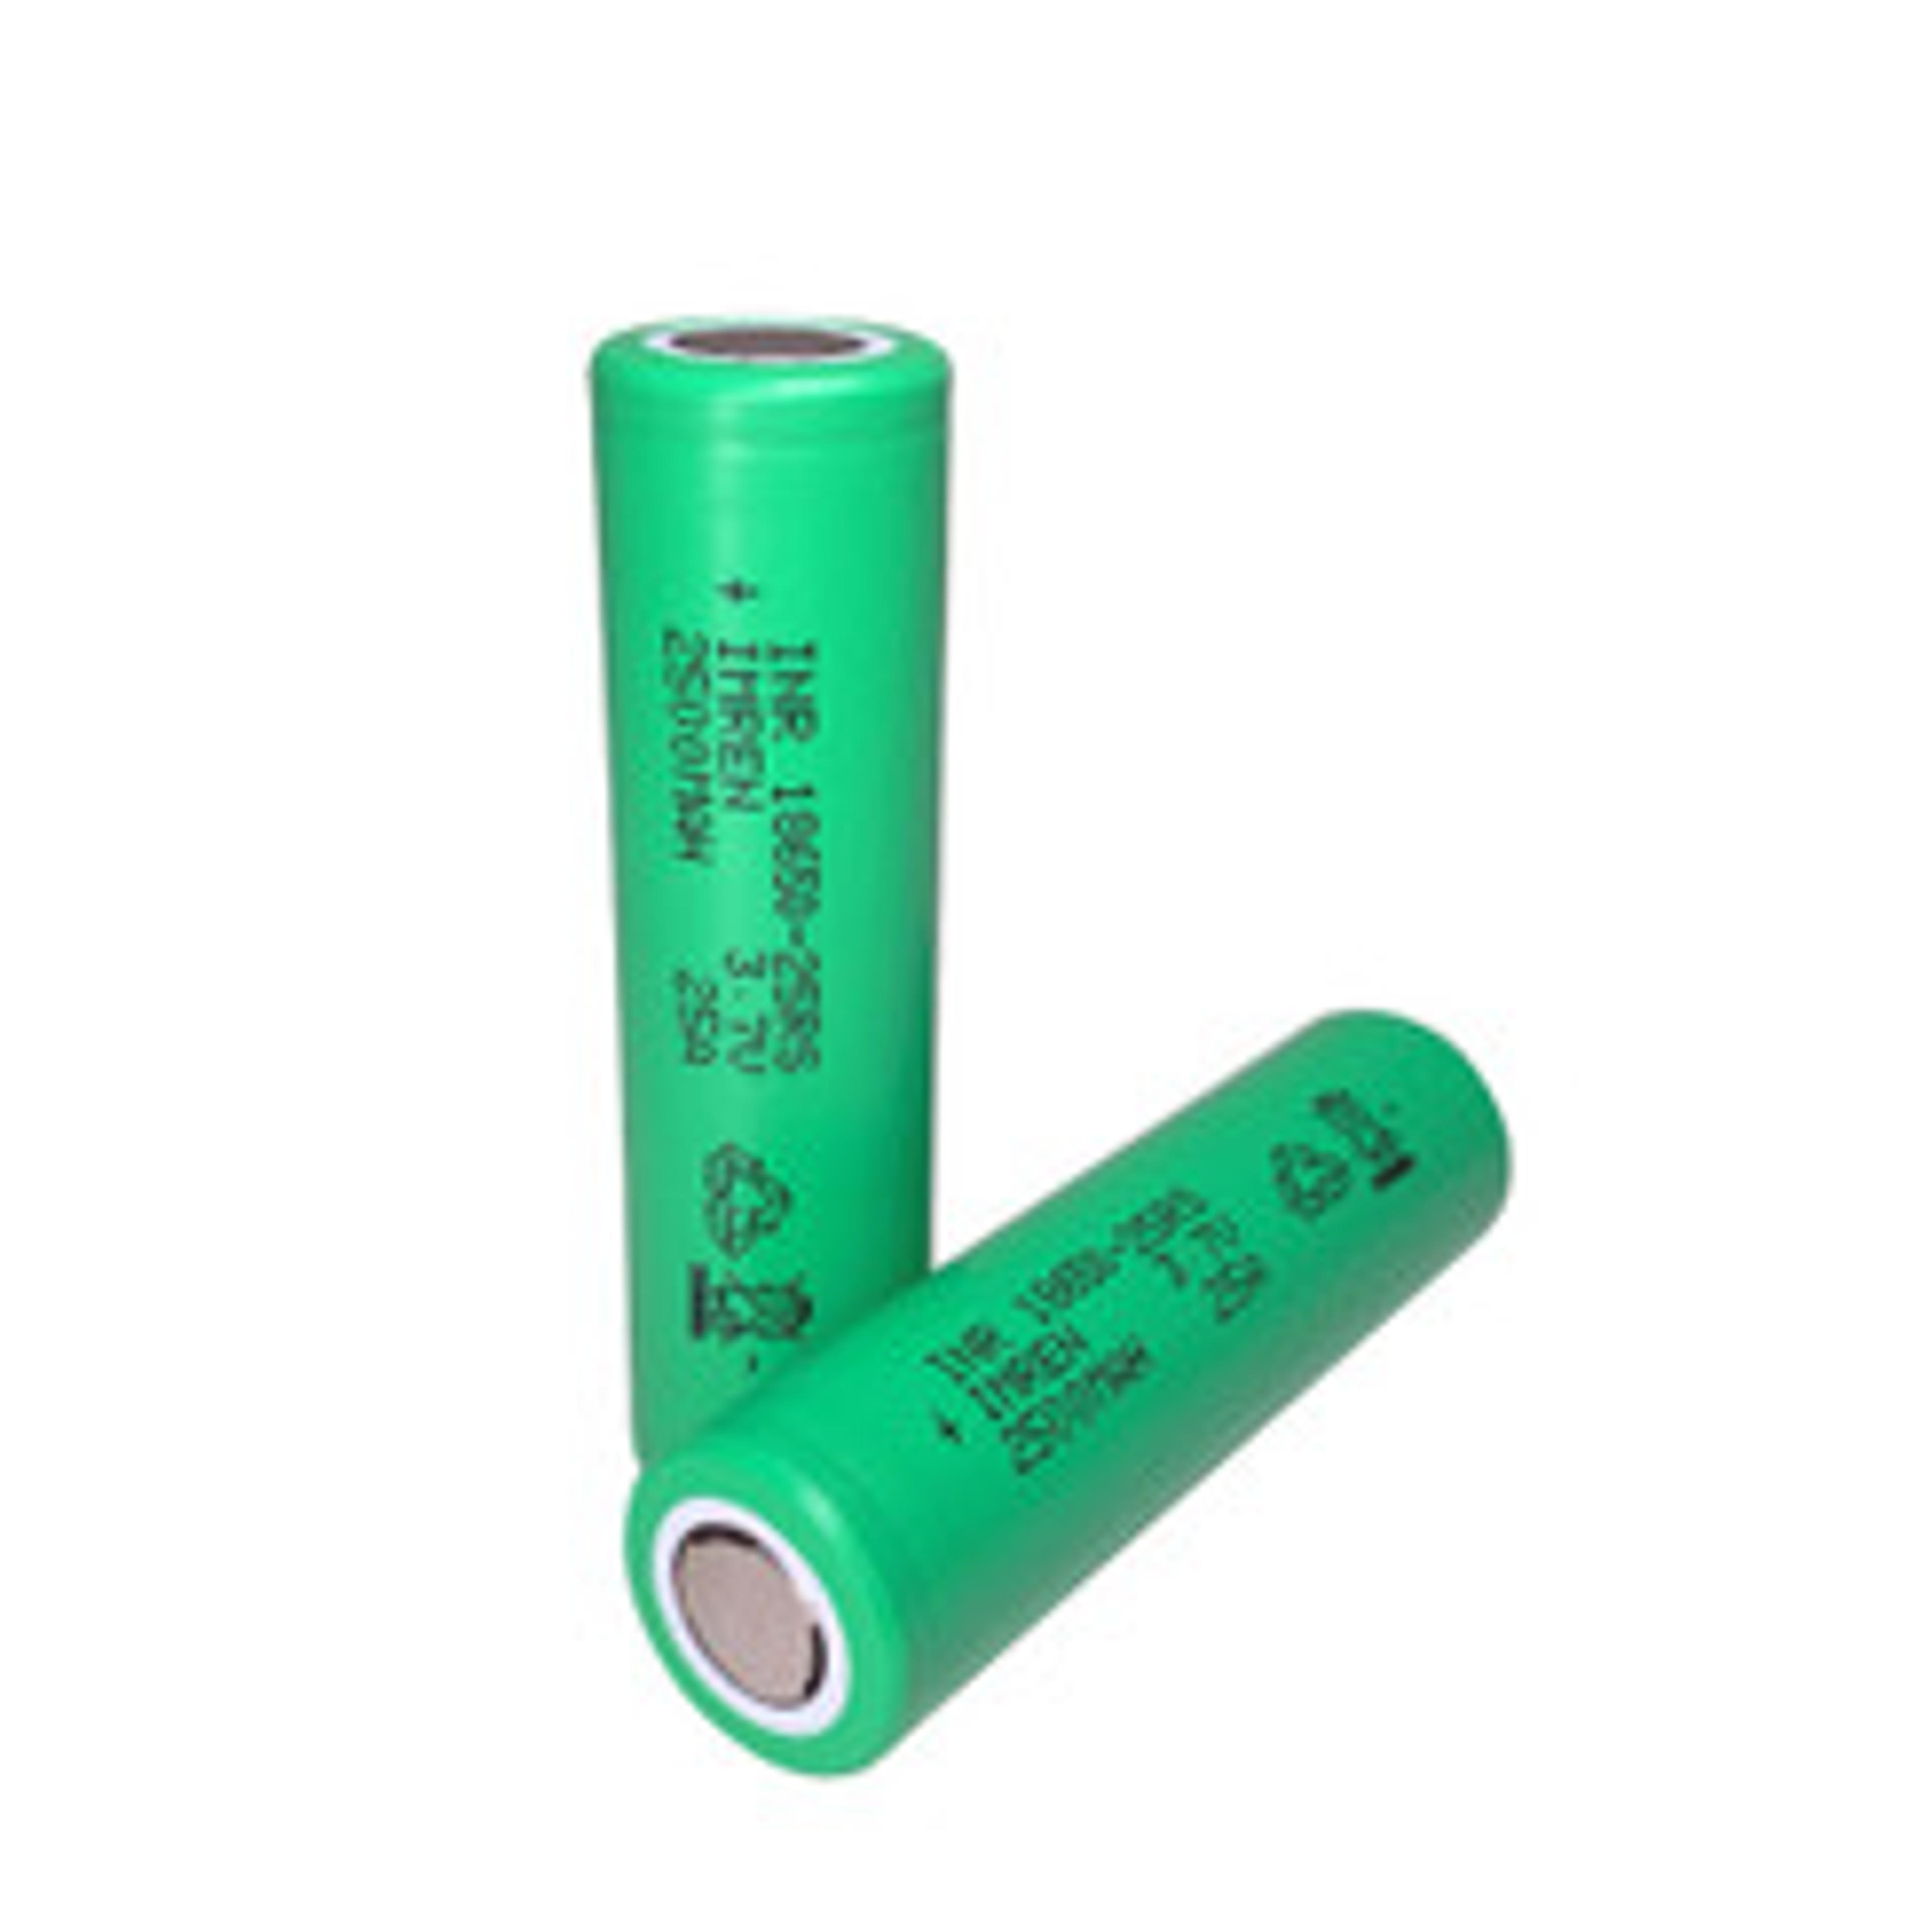 Imren (Green) IMR 18650 25RS (2500mAh) 25A 3.7v Battery Flat-Top - 2 Pack